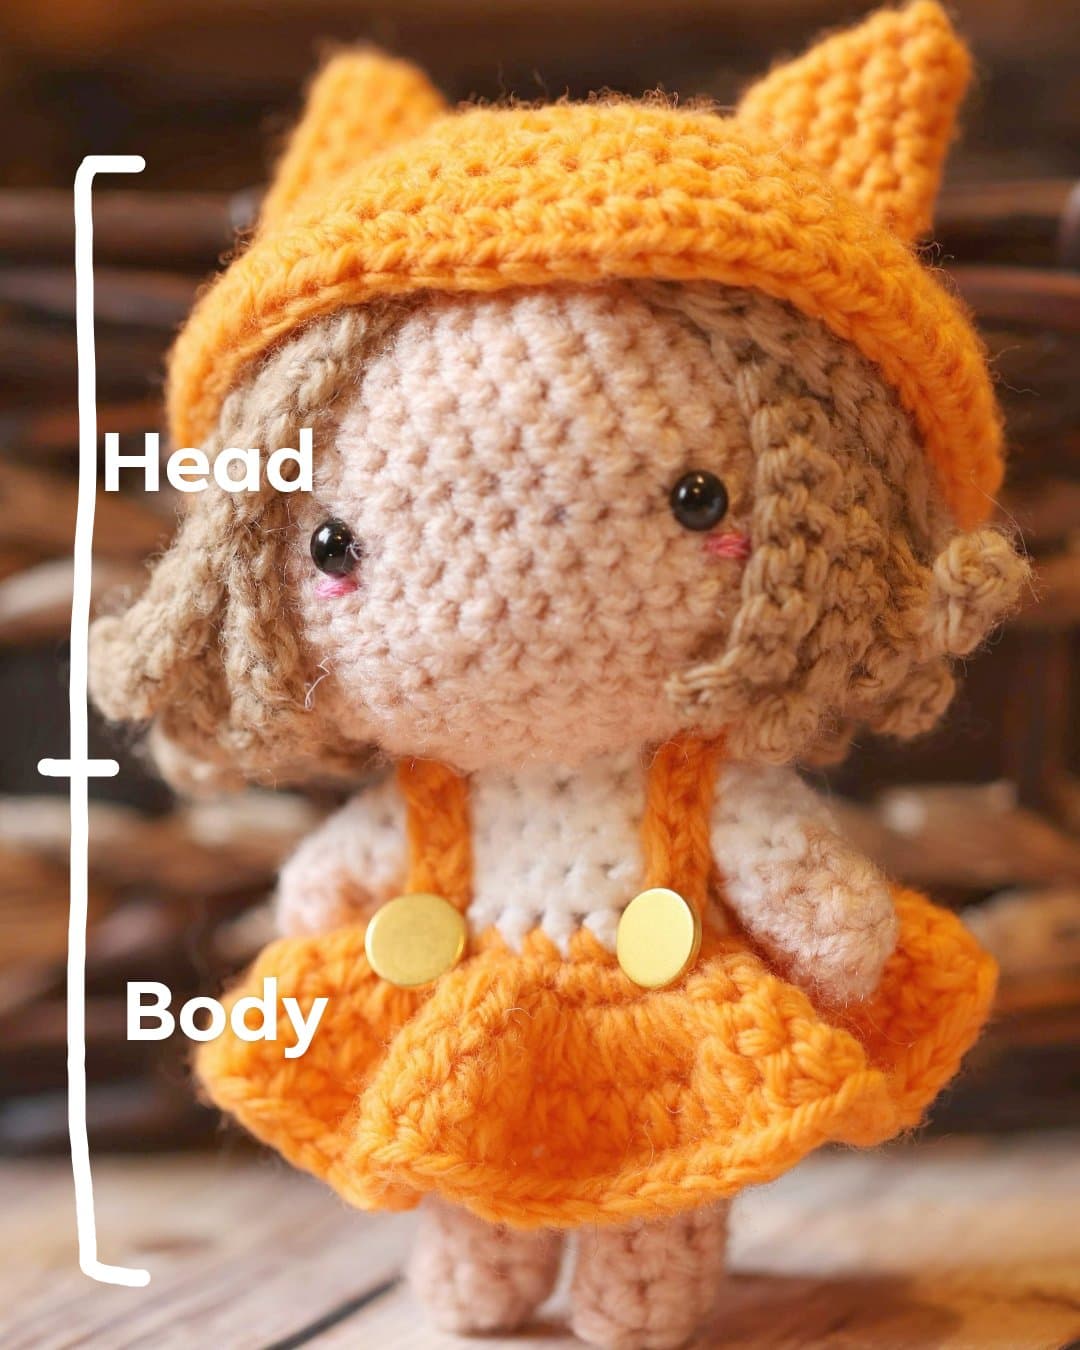 How to Custom Eyes — BuddyRumi Amigurumi Crochet Patterns